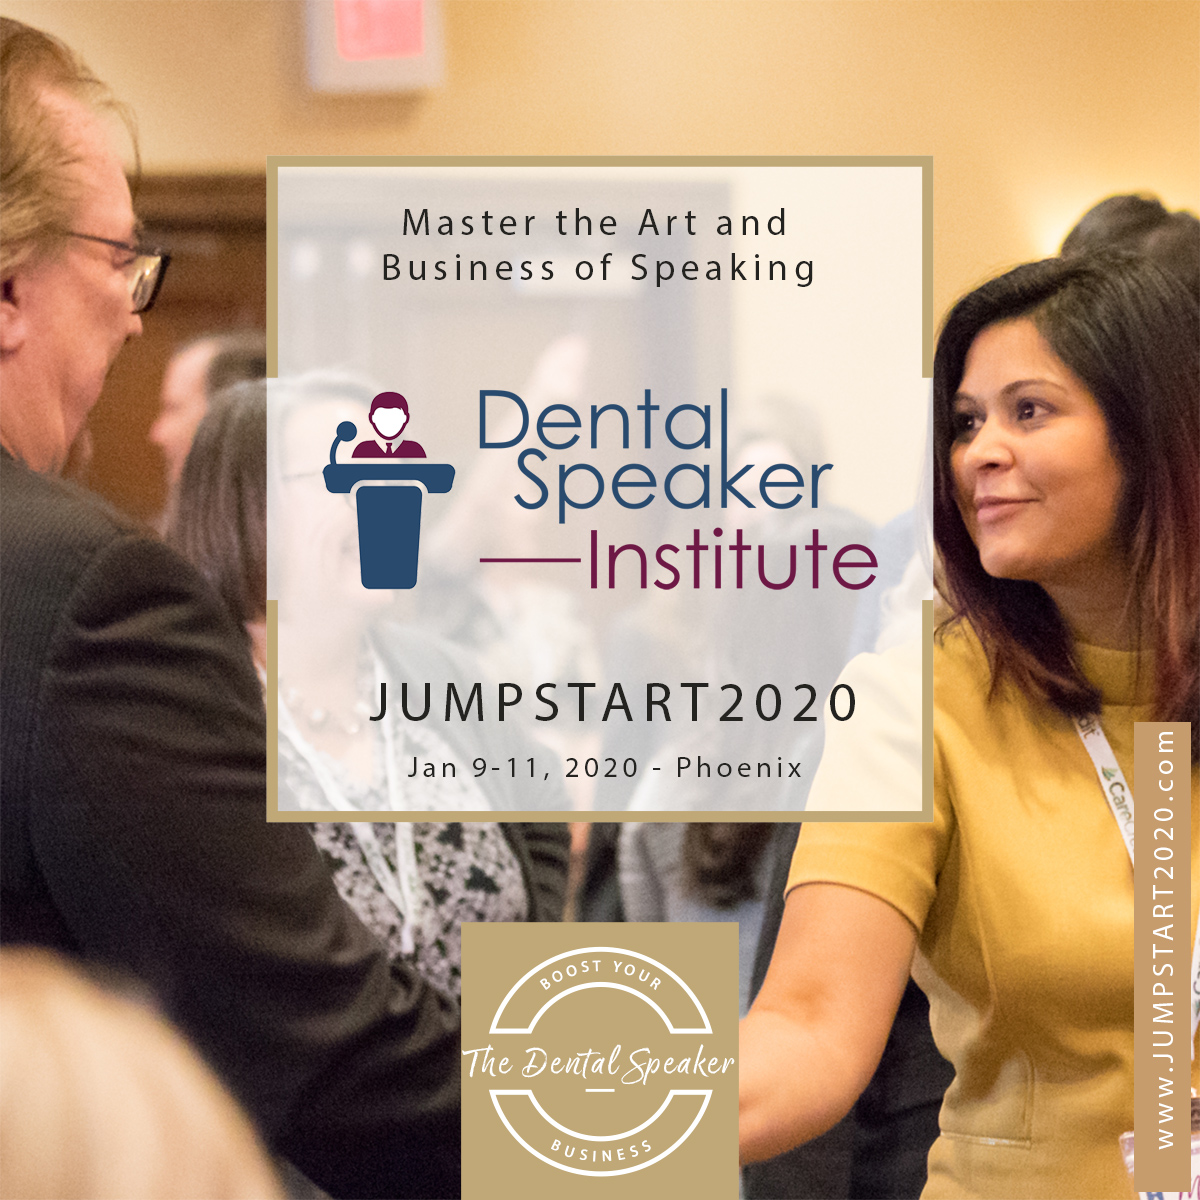 Jumpstart2020 Dental Speaker Institute event in Phoenix